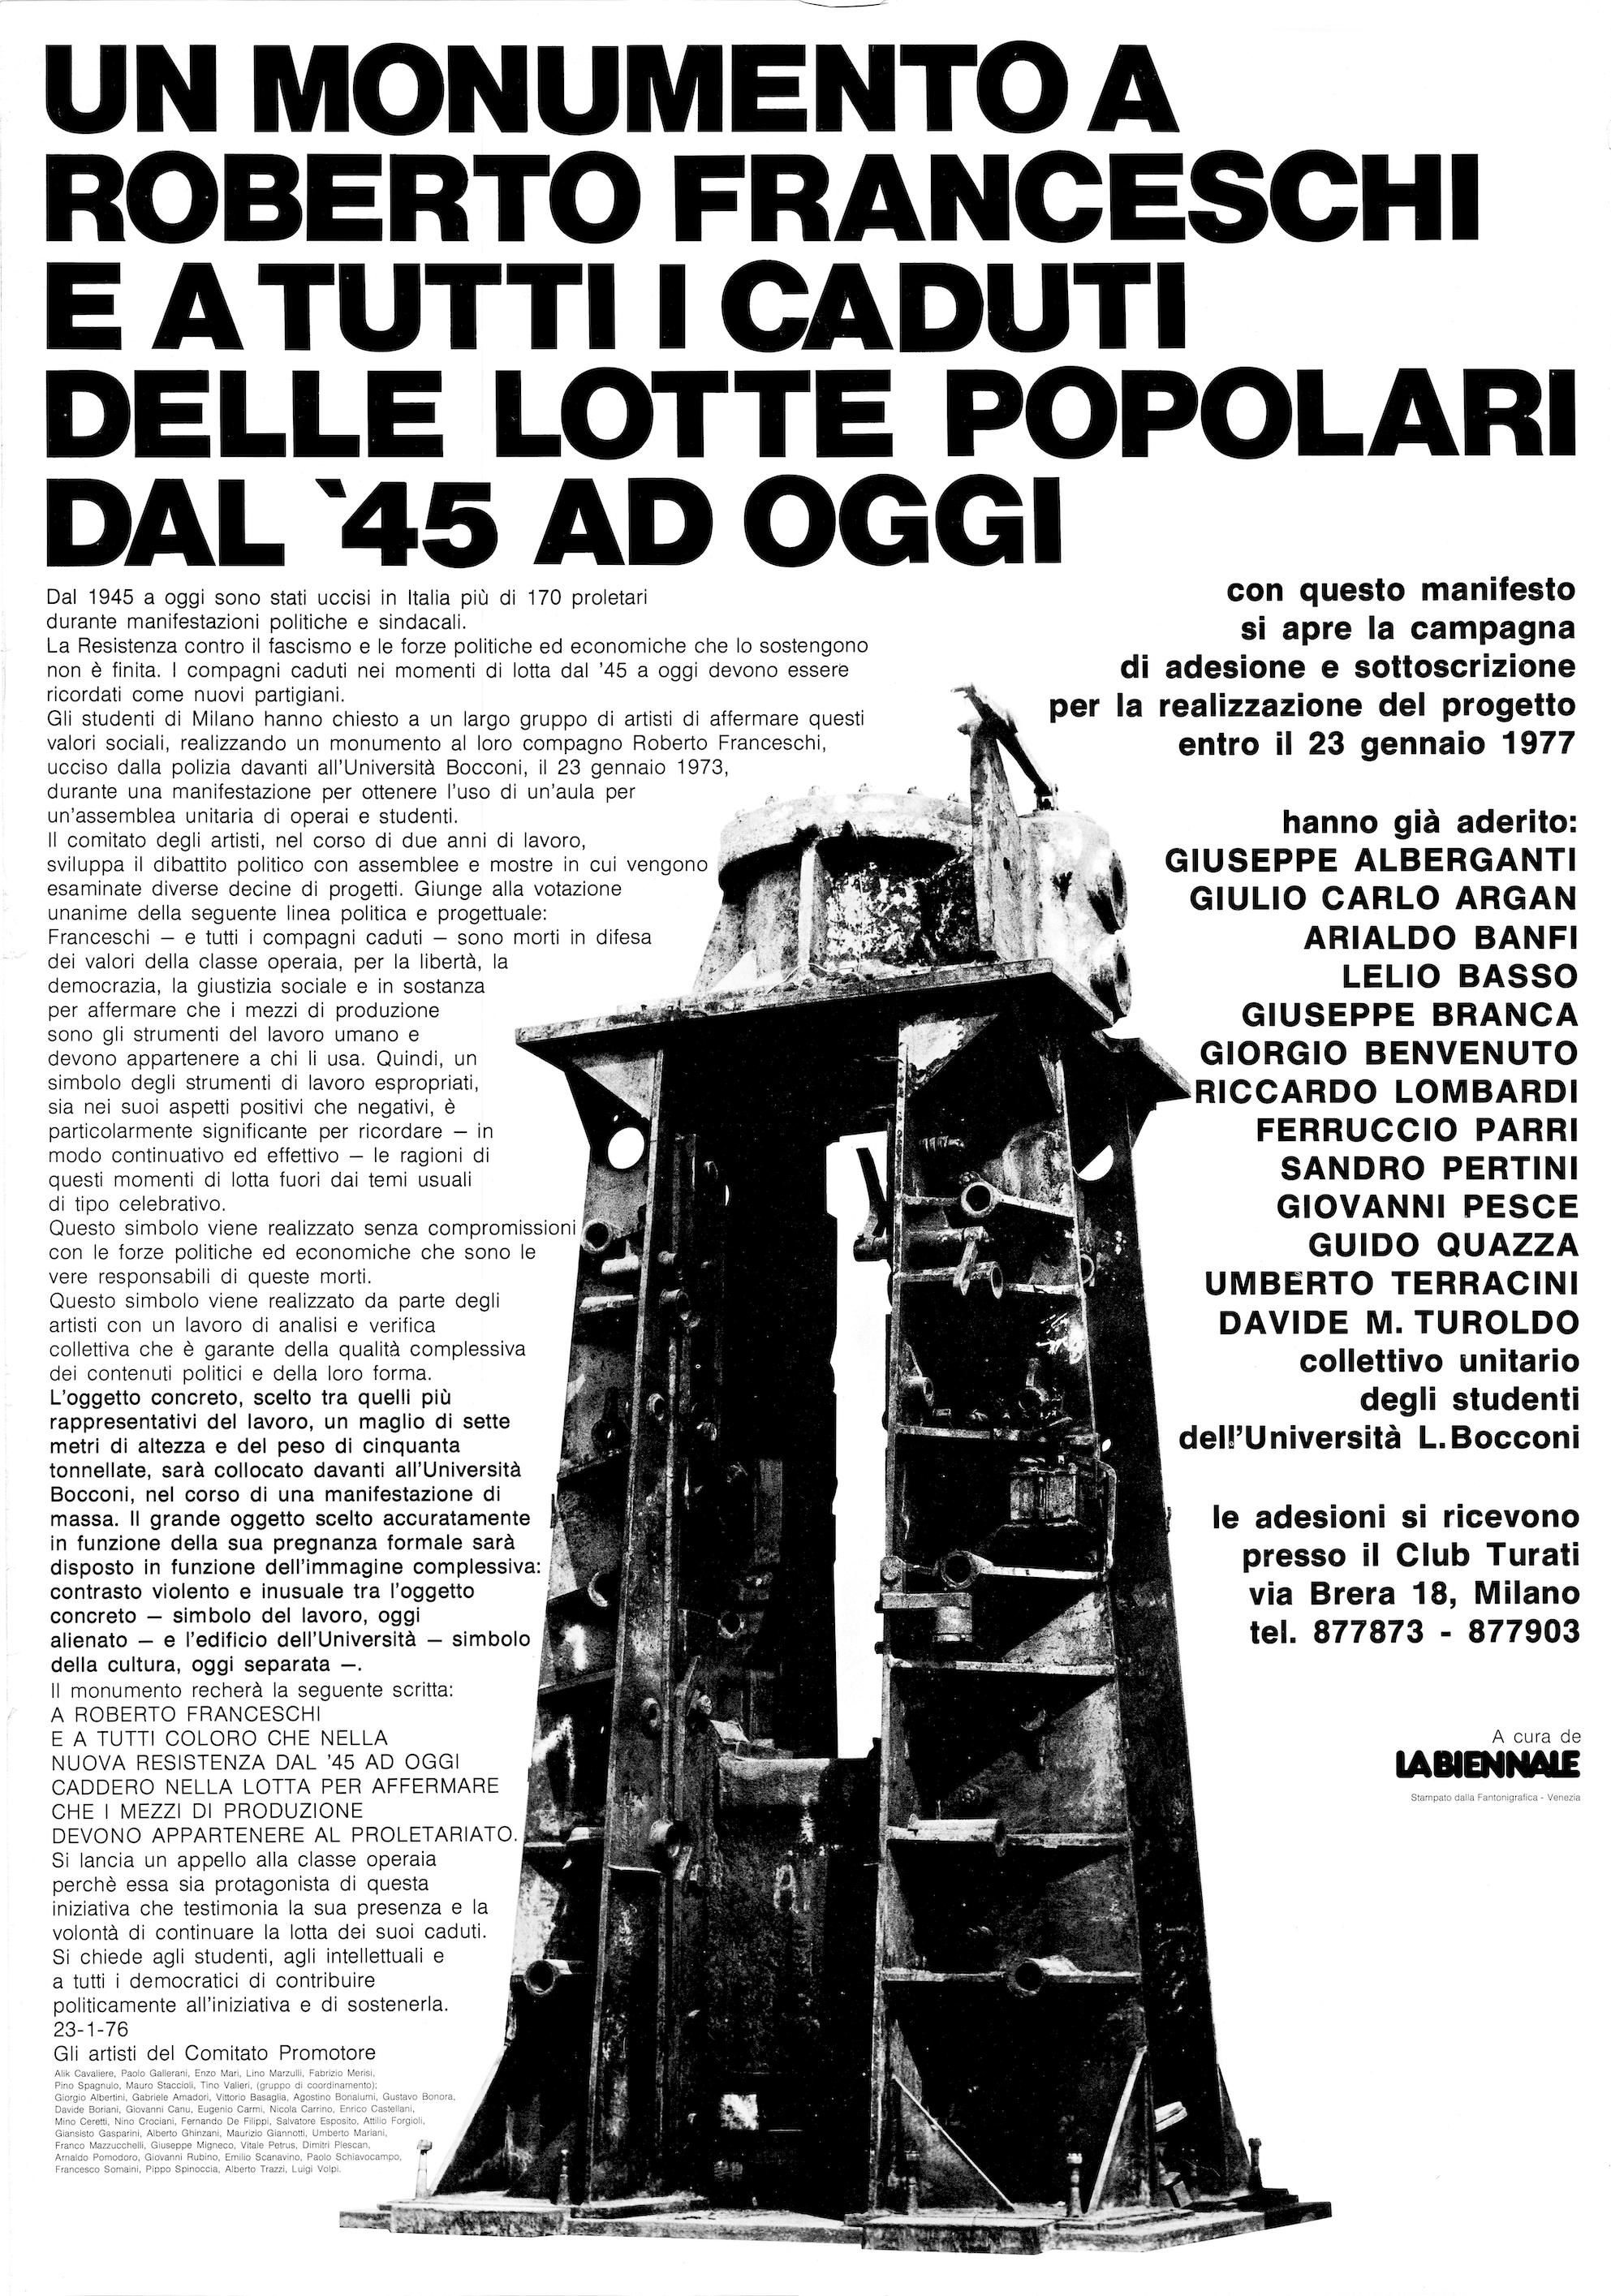 Monumento a Roberto Franceschi | Roberto Franceschi Memorial, manifesto | affiche, Biennale di Venezia, 1976.  © Fondazione Roberto Franceschi Onlus